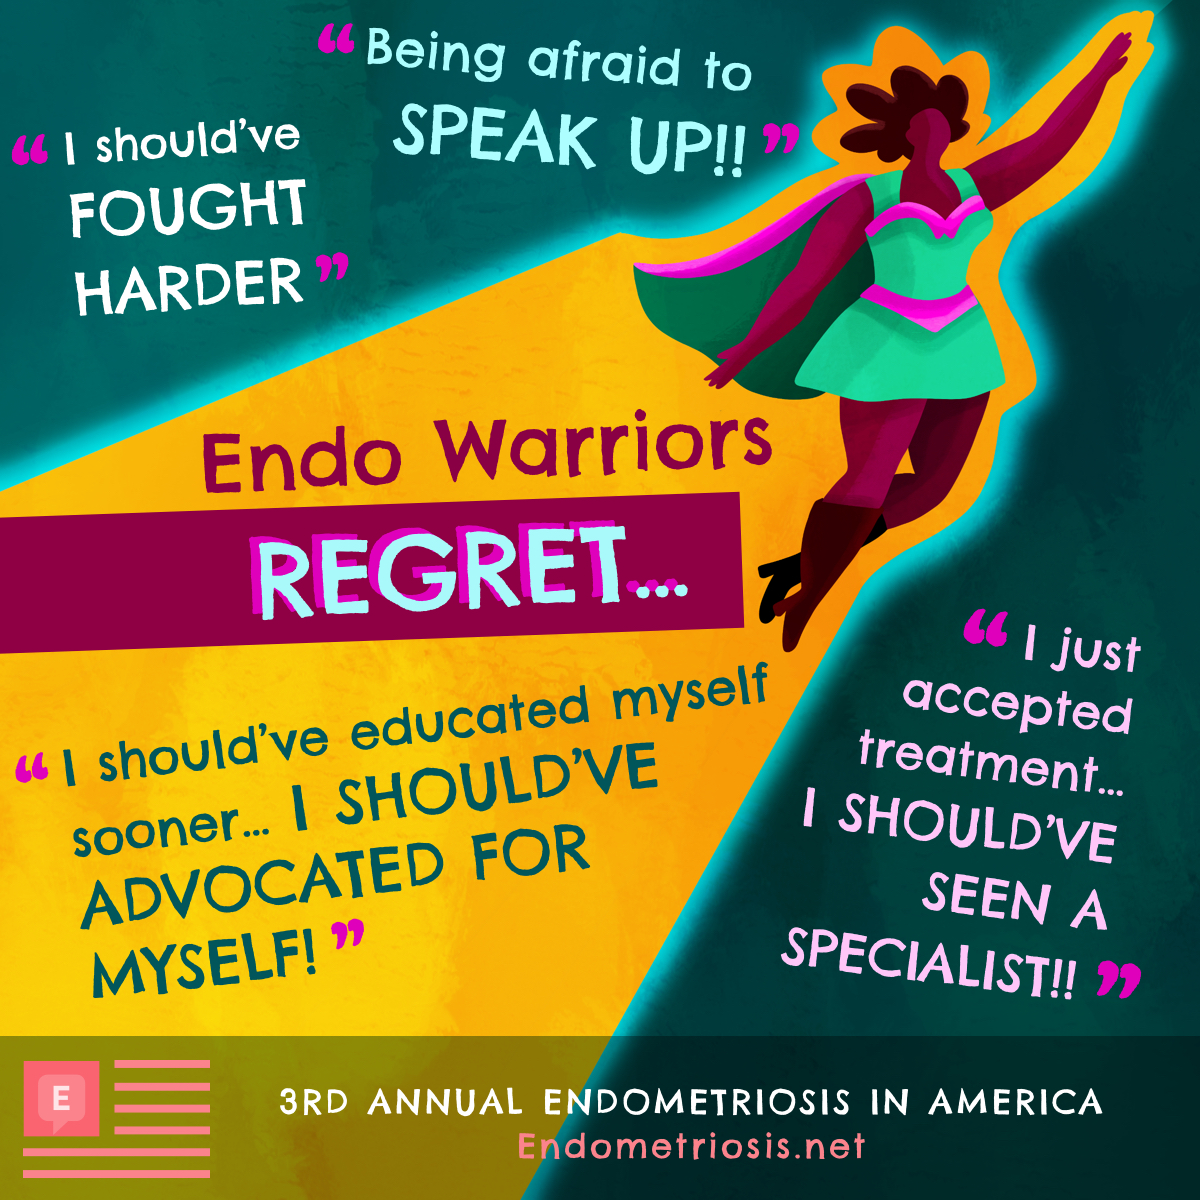 Endo warriors regret: “I should’ve fought harder”, “I just accepted treatment… I should’ve seen a specialist!”, “Being afraid to speak up!”, and “I should’ve educated myself sooner… I should’ve advocated for myself”